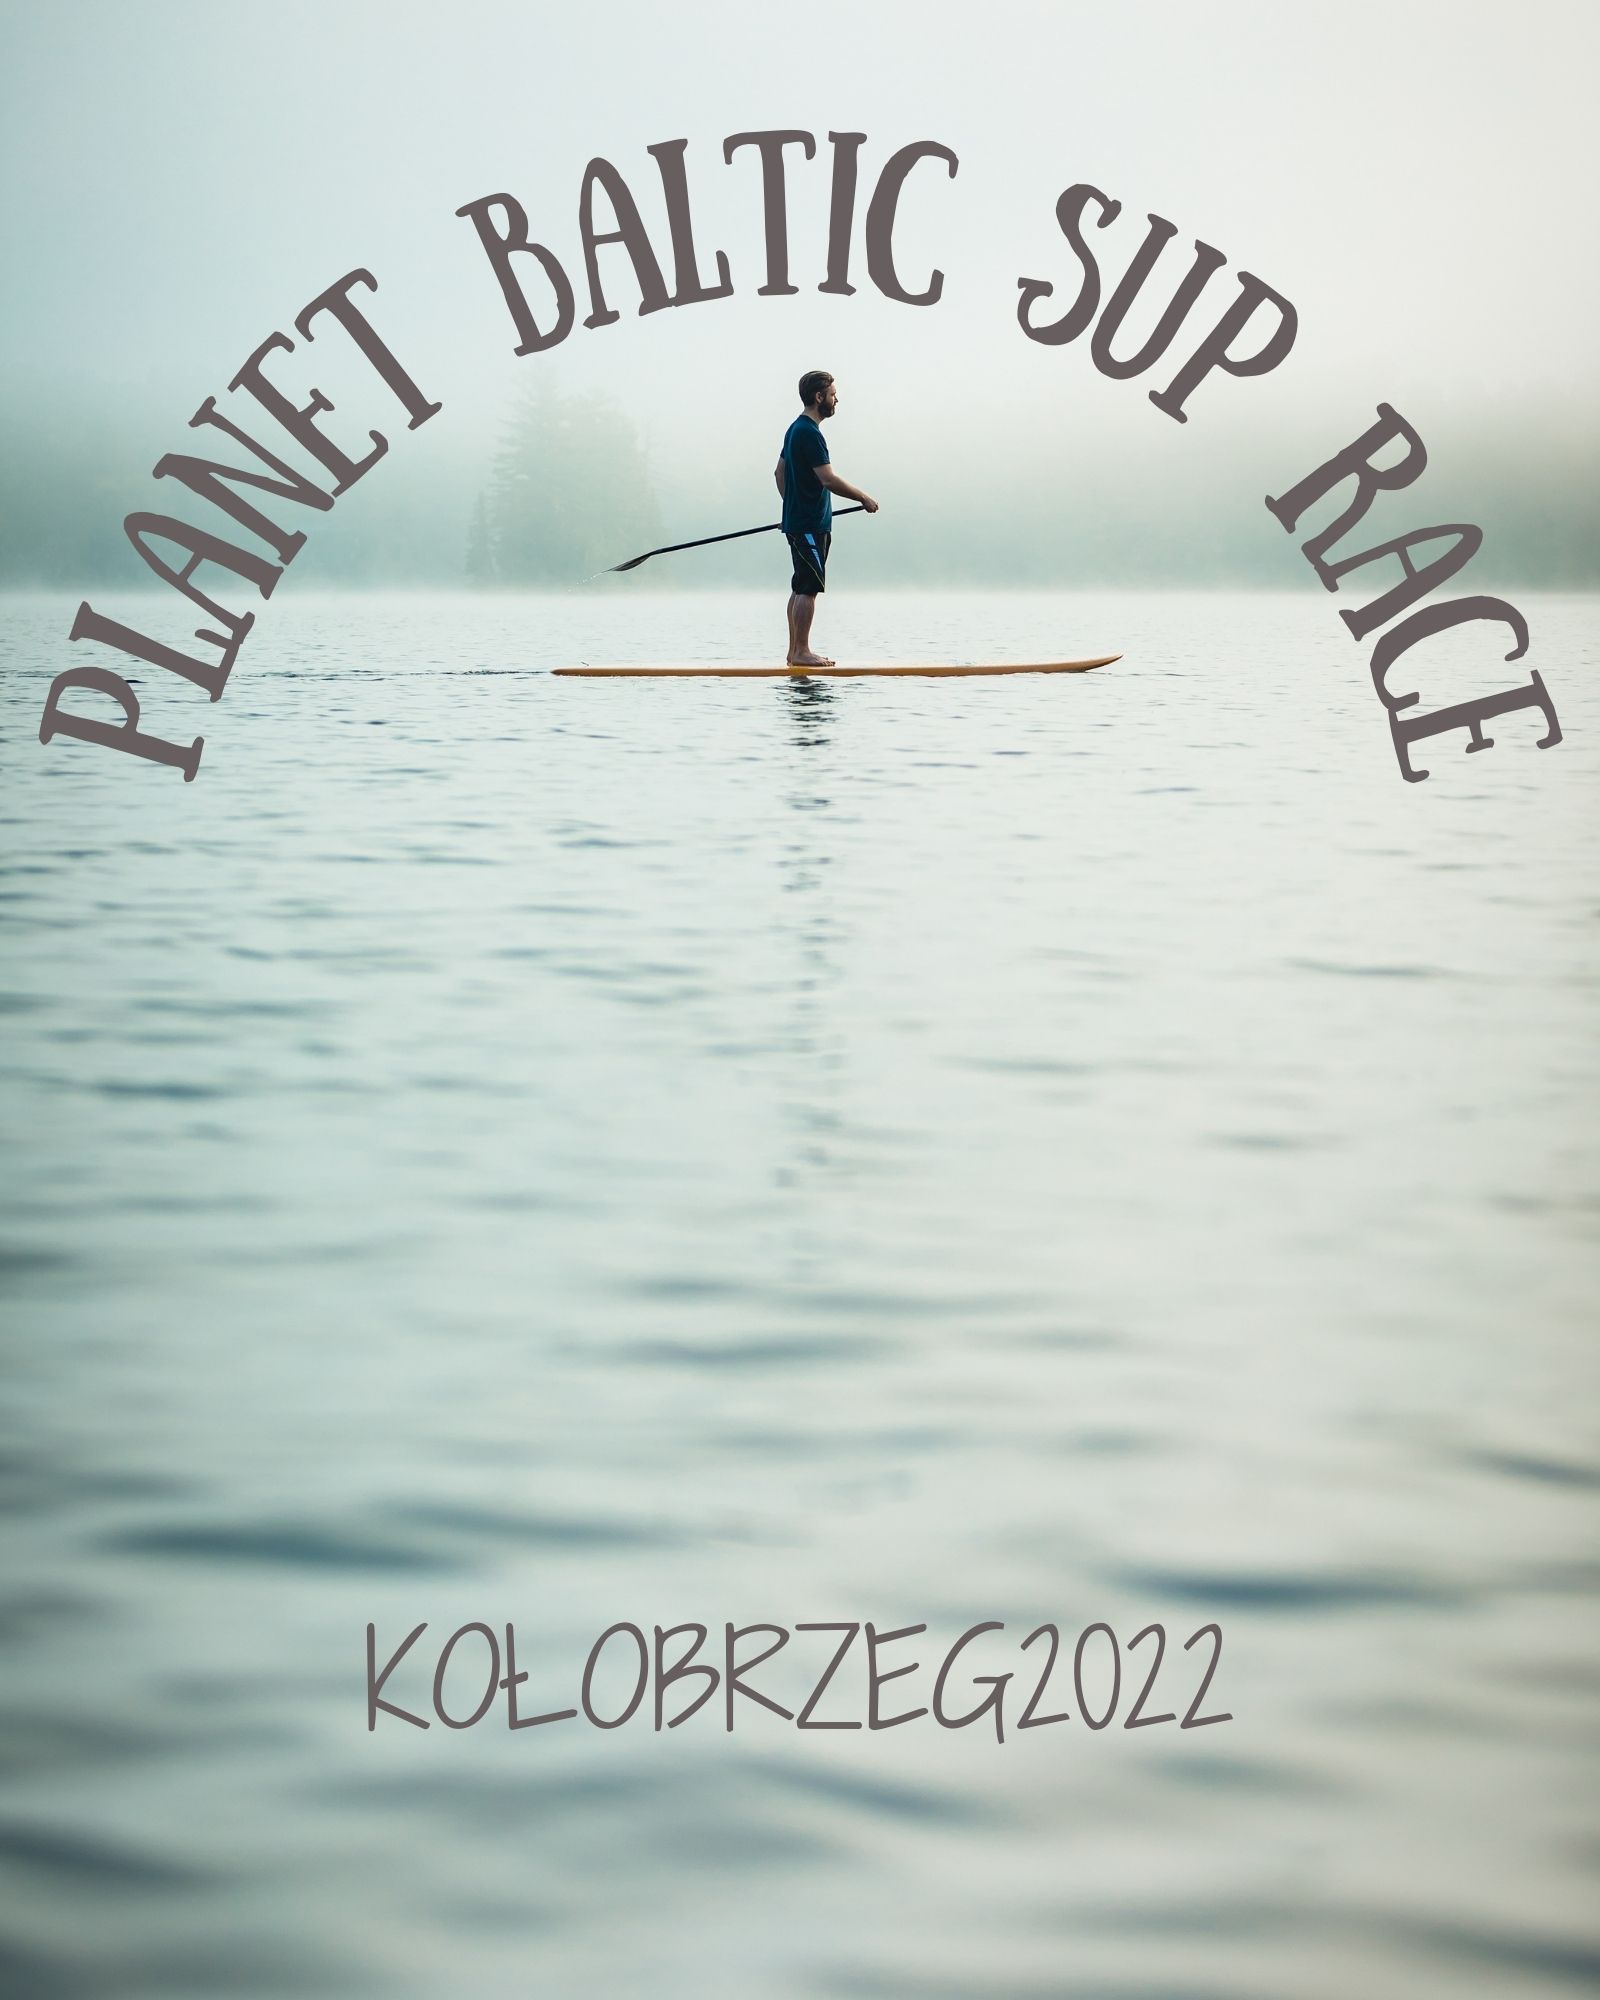 Planet Baltic SUP Race 2022